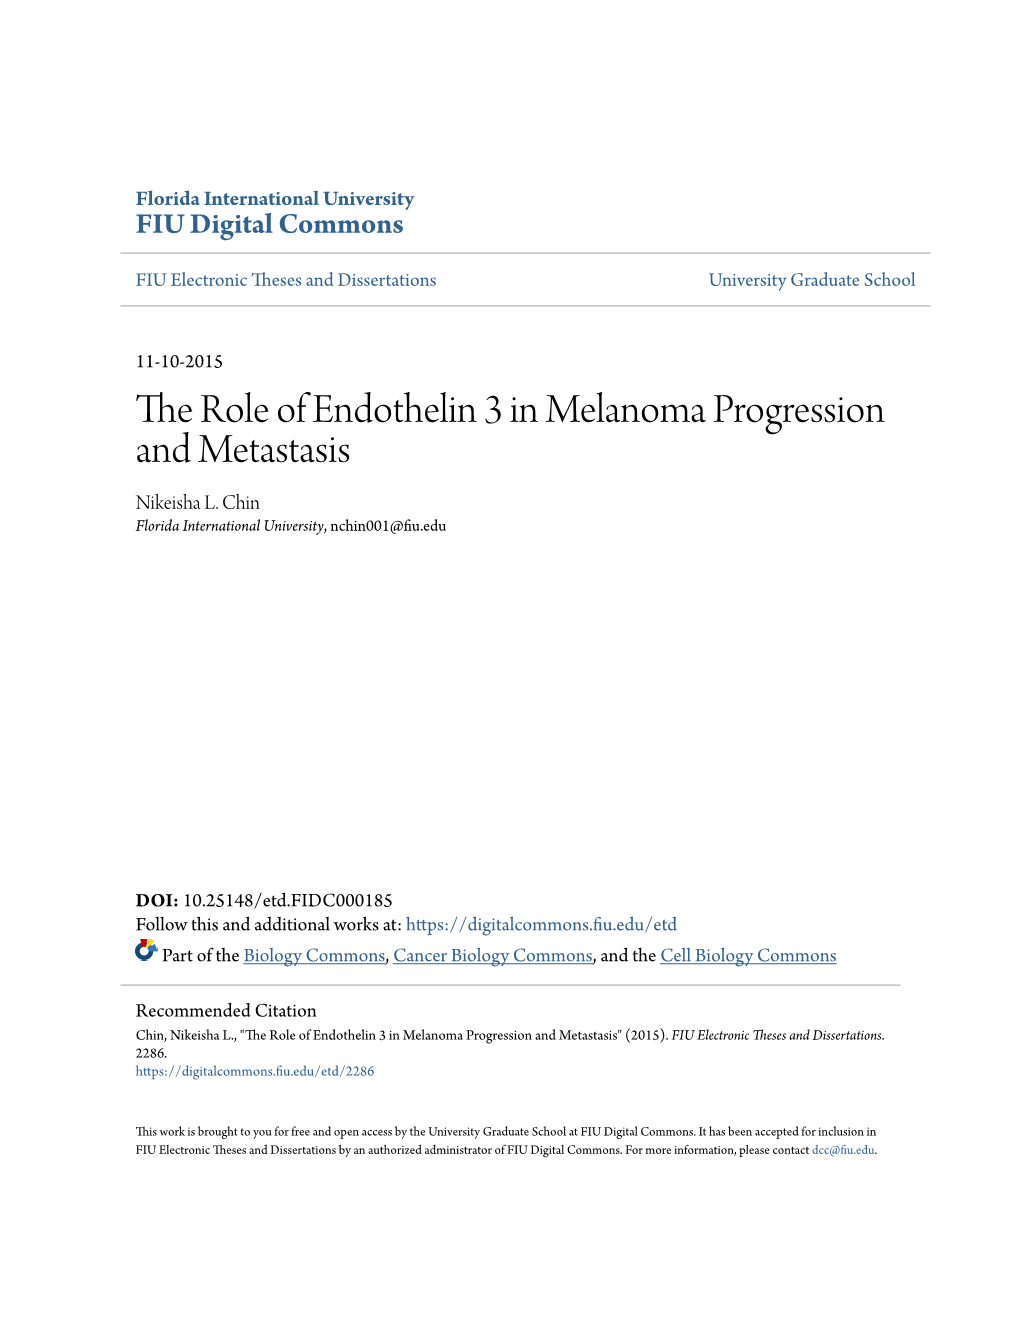 The Role of Endothelin 3 in Melanoma Progression and Metastasis Nikeisha L